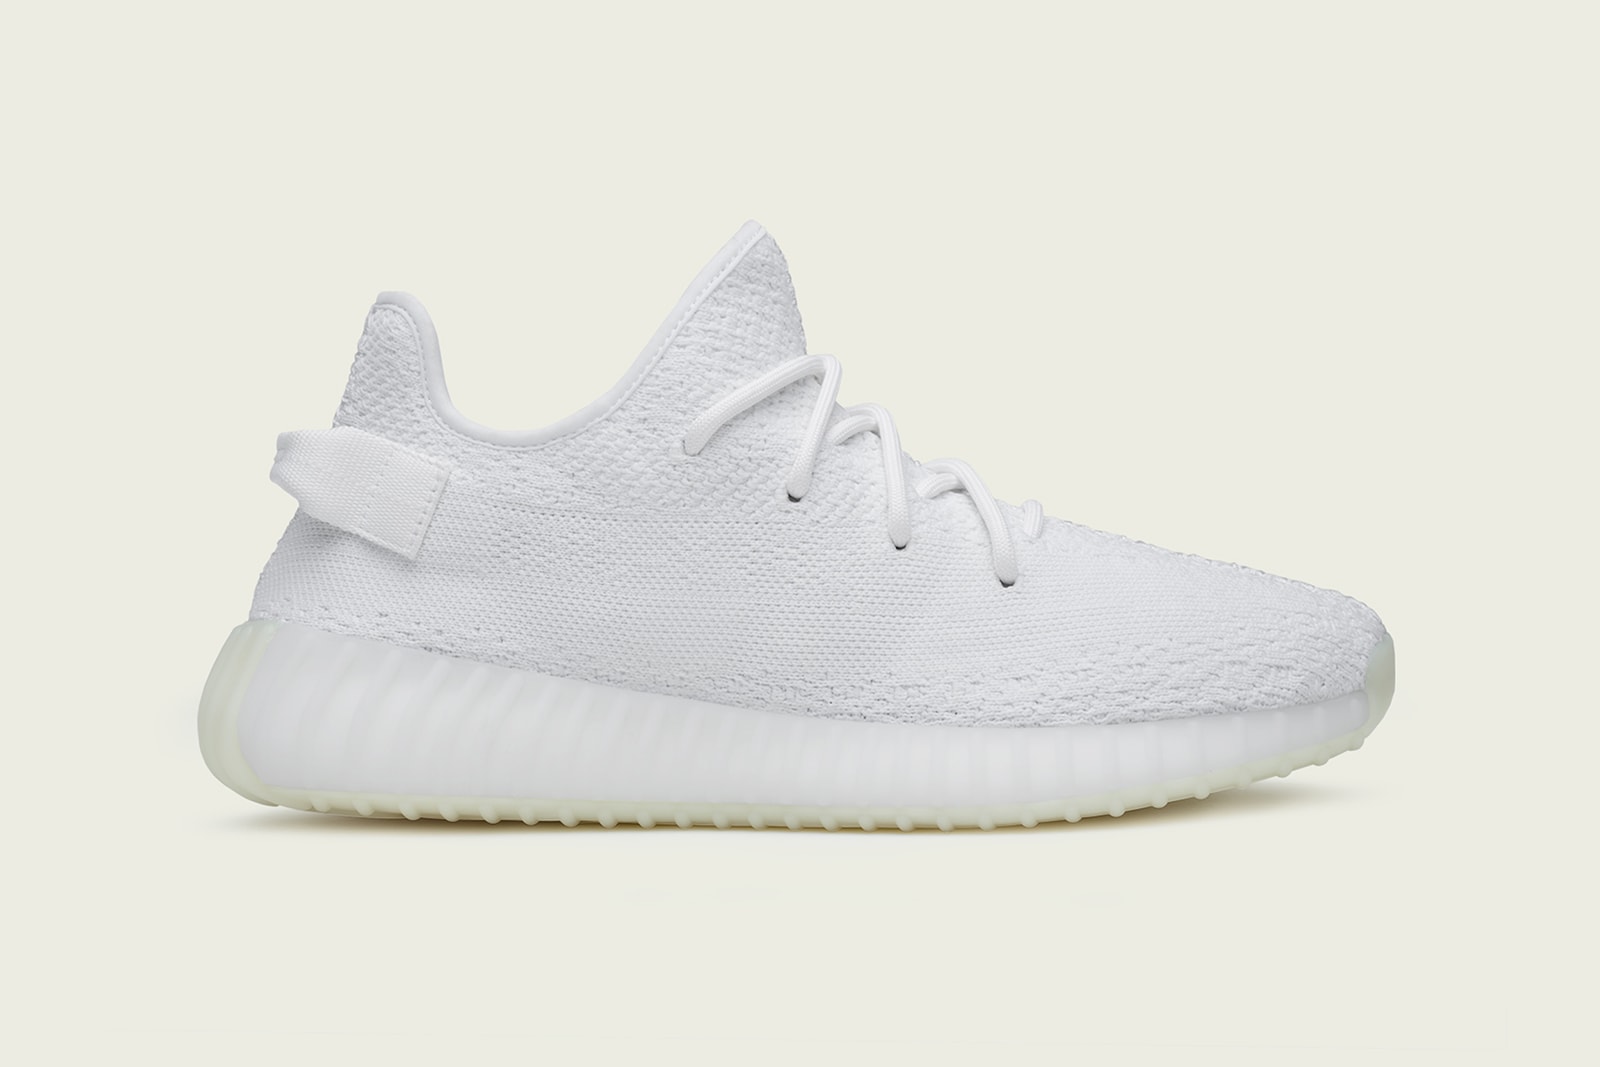 adidas Yeezy Boost 350 V2 Triple White Cream September Drop Details Kanye West Kim Kardashian Footwear Shoes Sneakers Kicks Trainers adidas